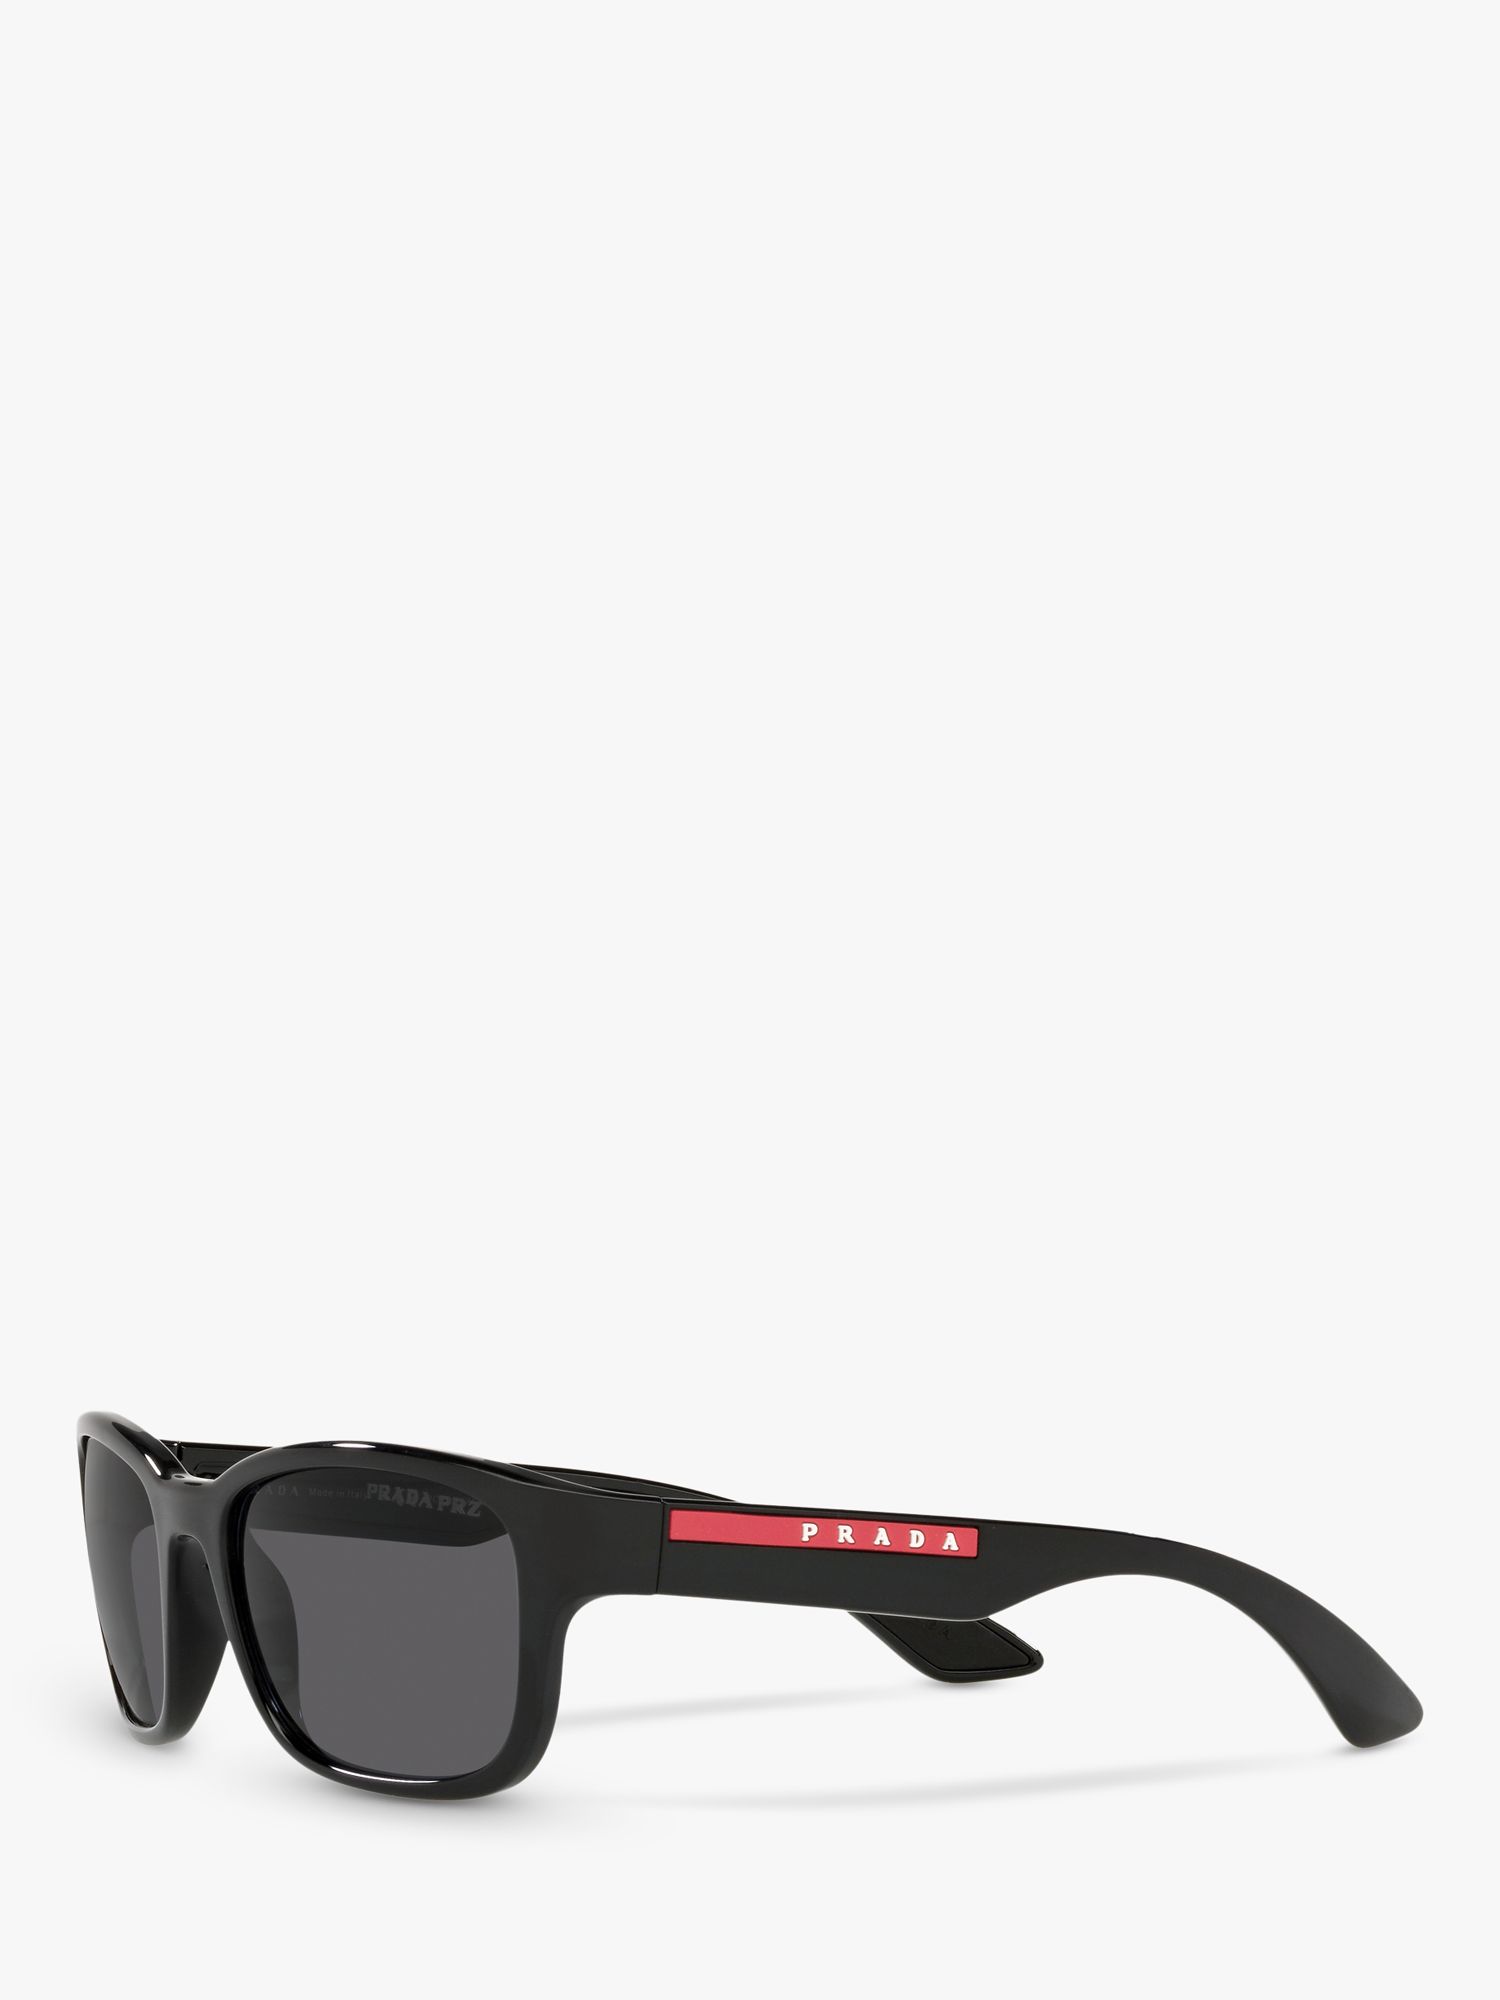 Prada Linea Rossa Ps 05vs Men S Polarised Rectangular Sunglasses Black At John Lewis And Partners